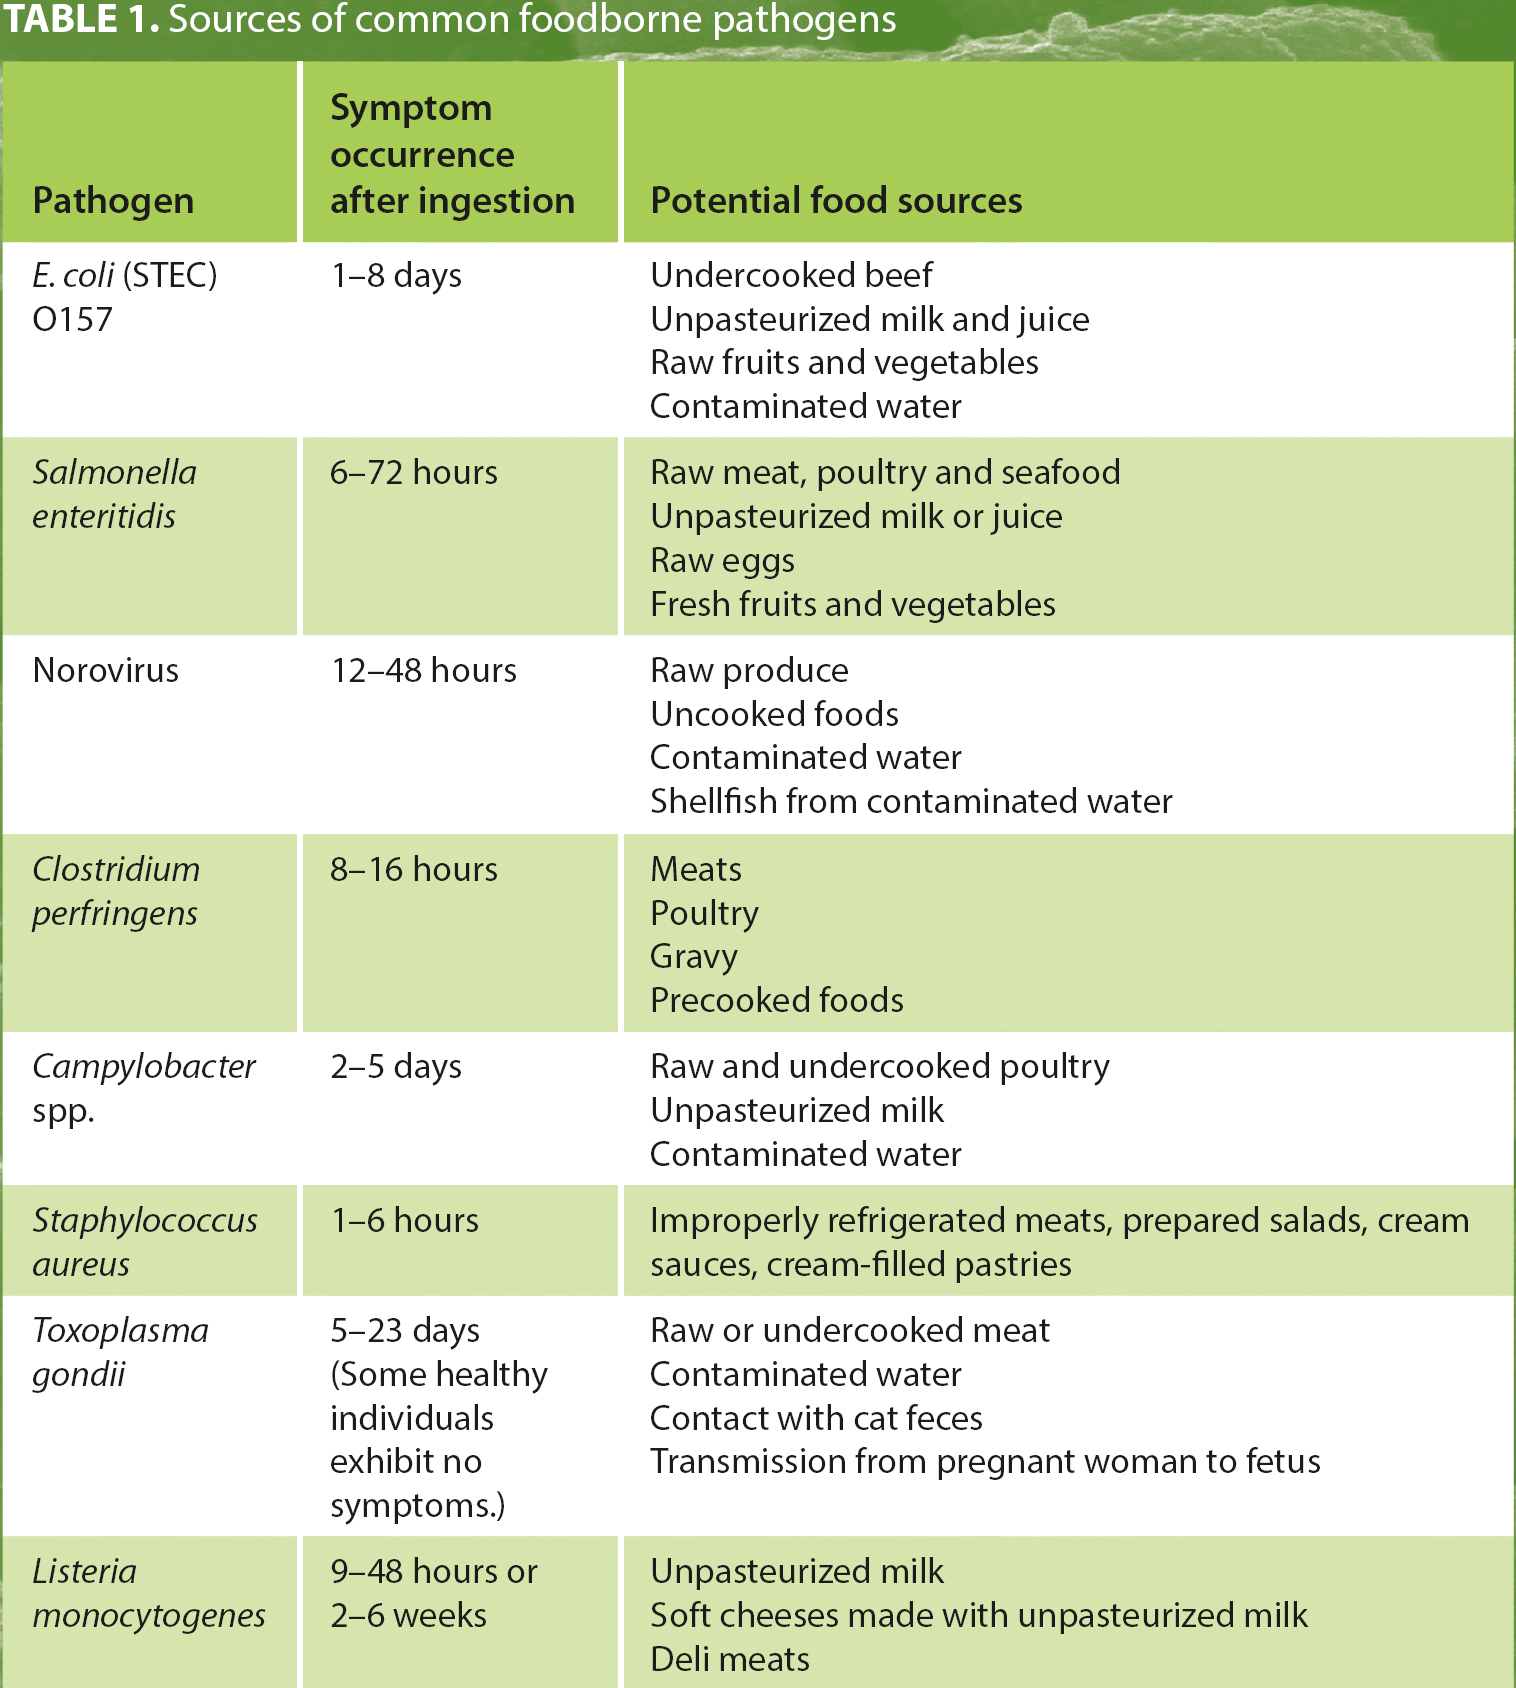 Sources of common foodborne pathogens